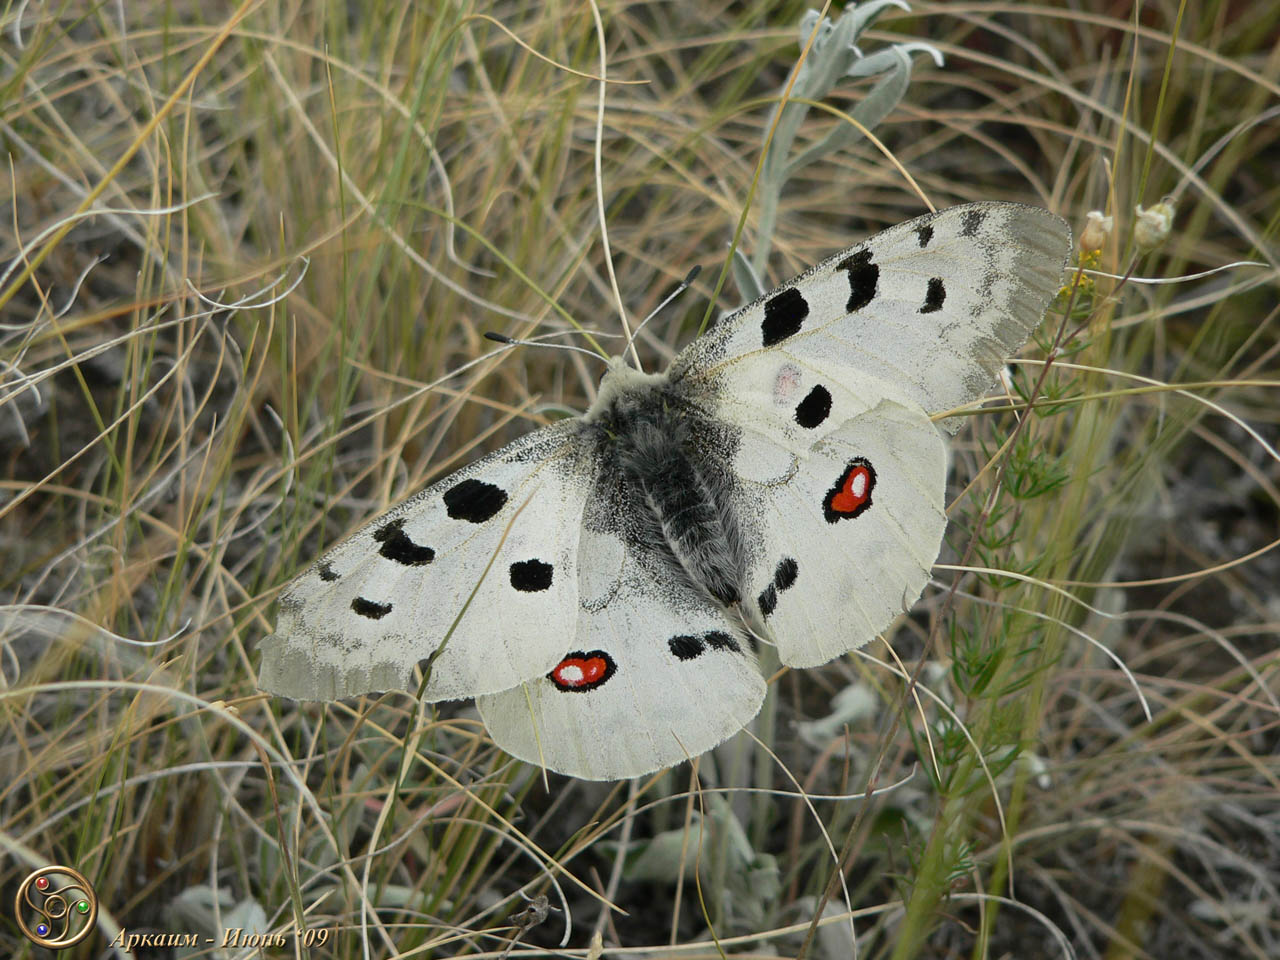 Бабочка на горе любви размах крыльев 15см - Фоторепортаж: Аркаим. Июнь 2009г. (часть 2)